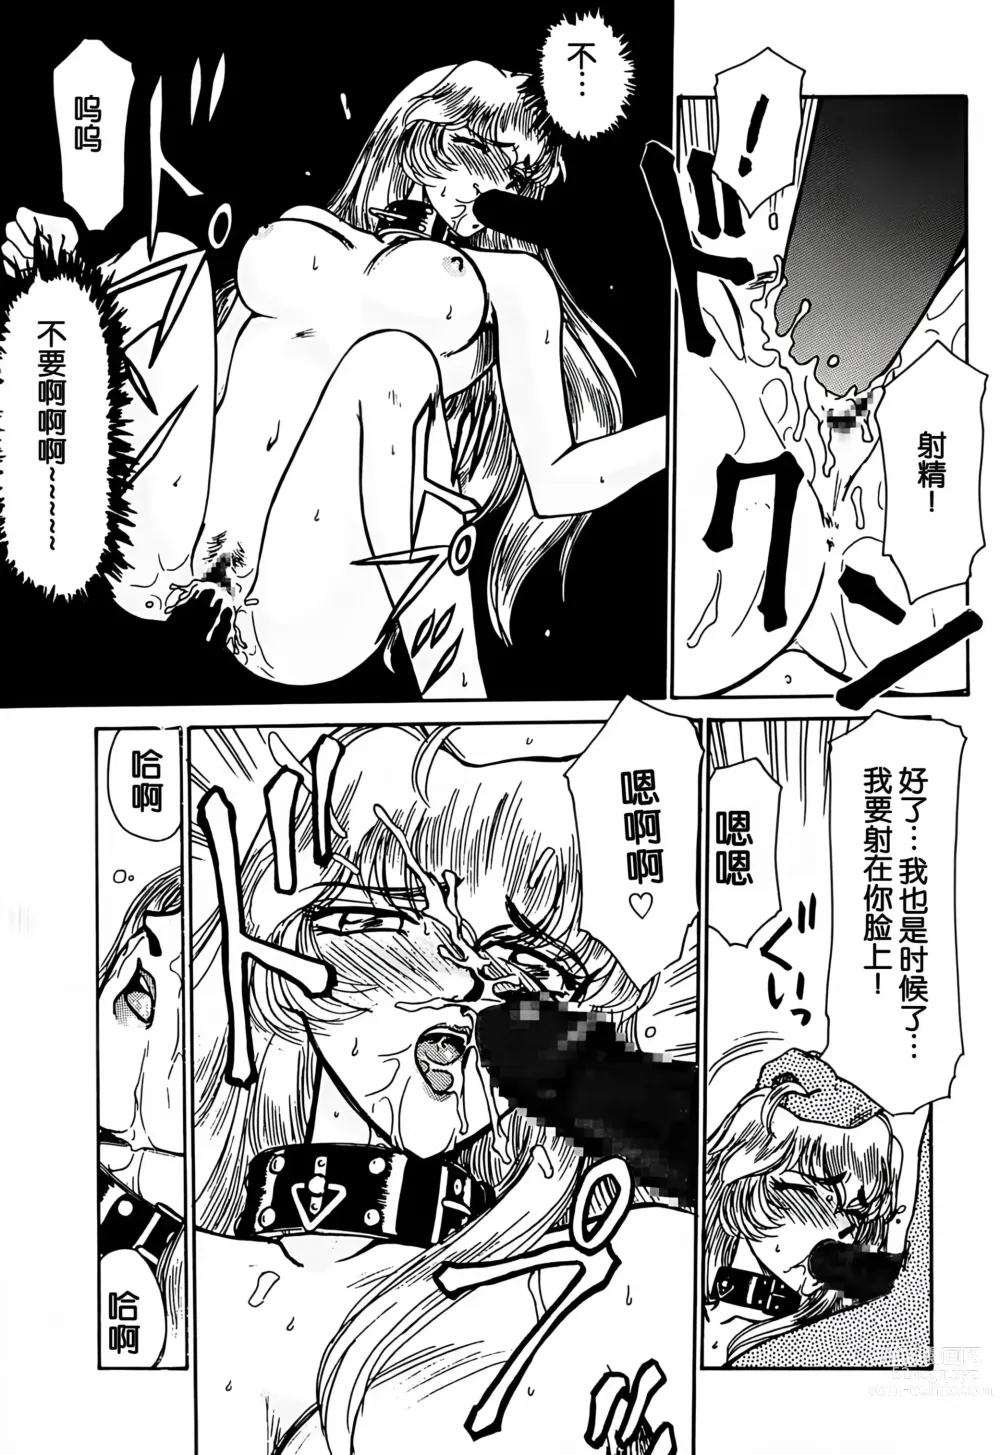 Page 58 of doujinshi Nise DRAGON BLOOD! 1.